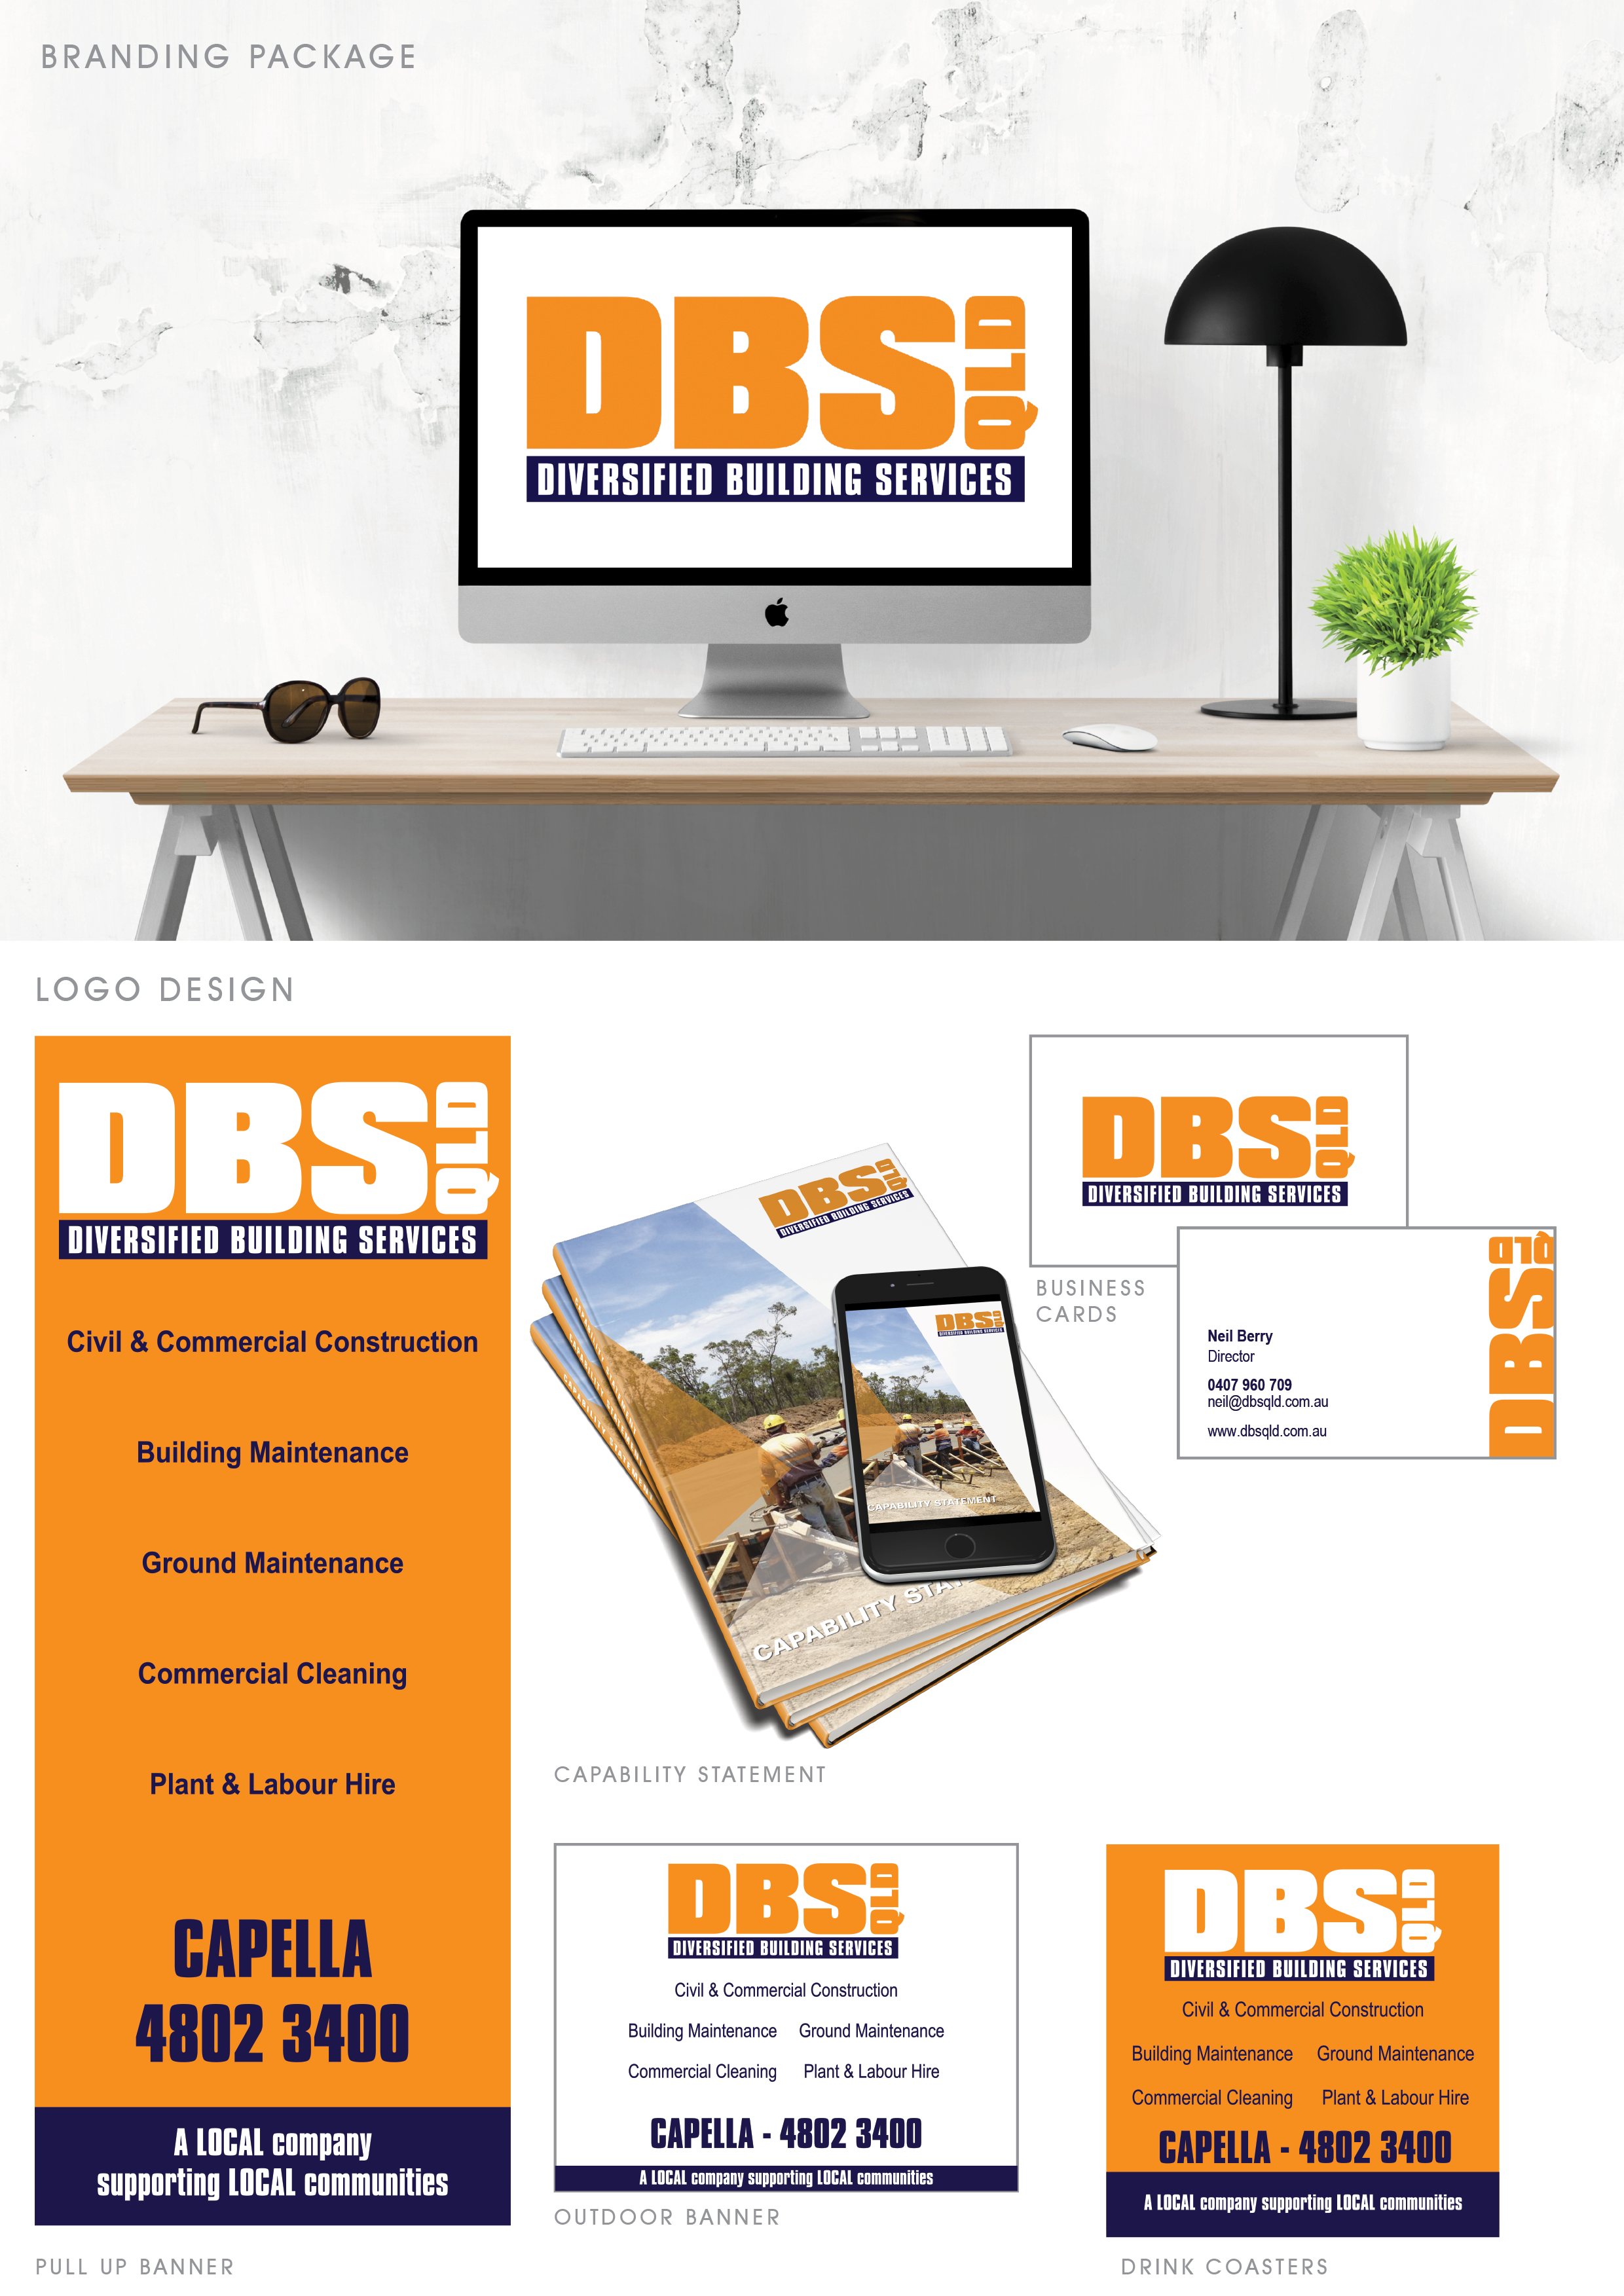 APAP Events Event Management and Graphic Design Rockhampton DBS Design Package